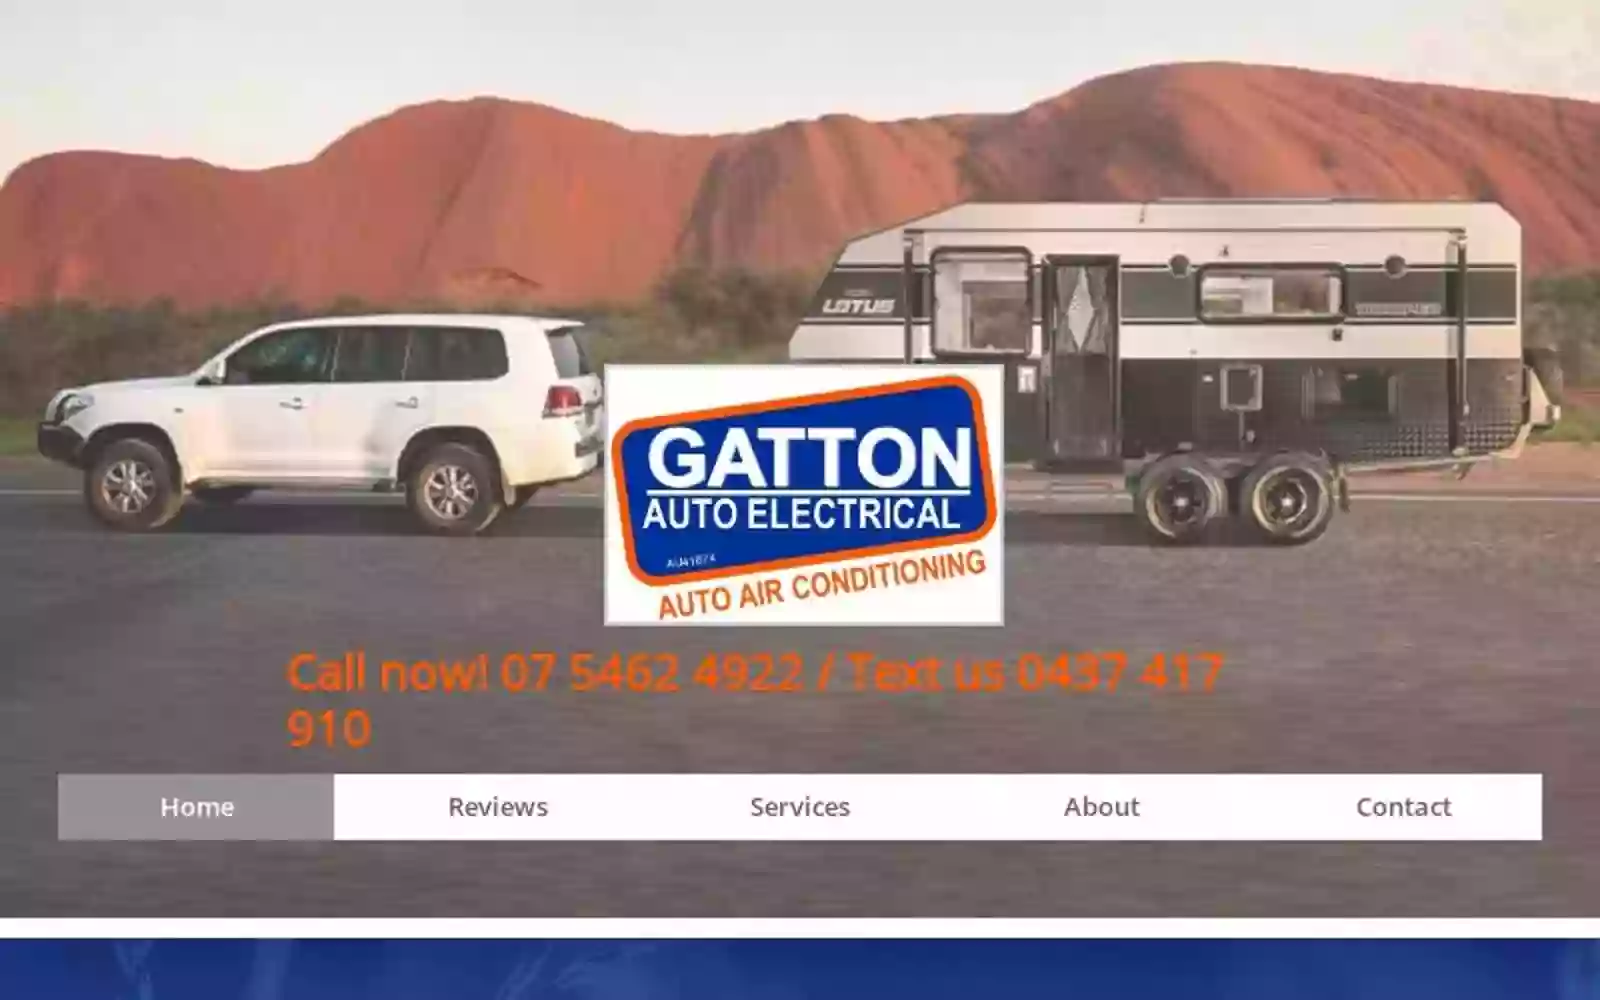 Gatton Auto Electrical & Auto Air Conditioning